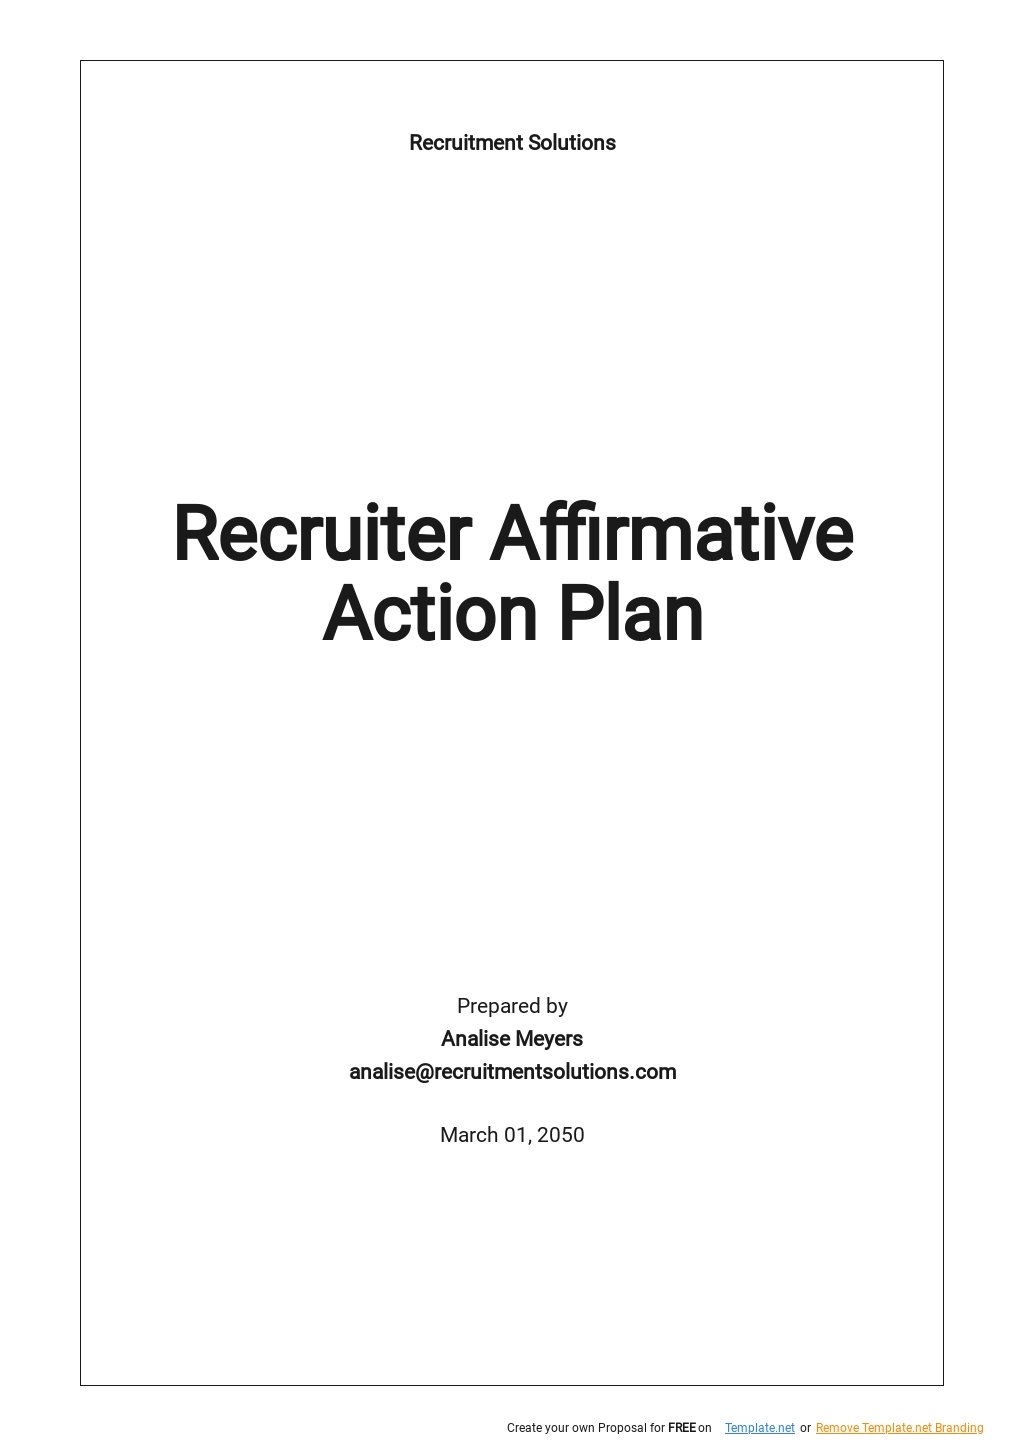 Recruiter Affirmative Action Plan Template.jpe